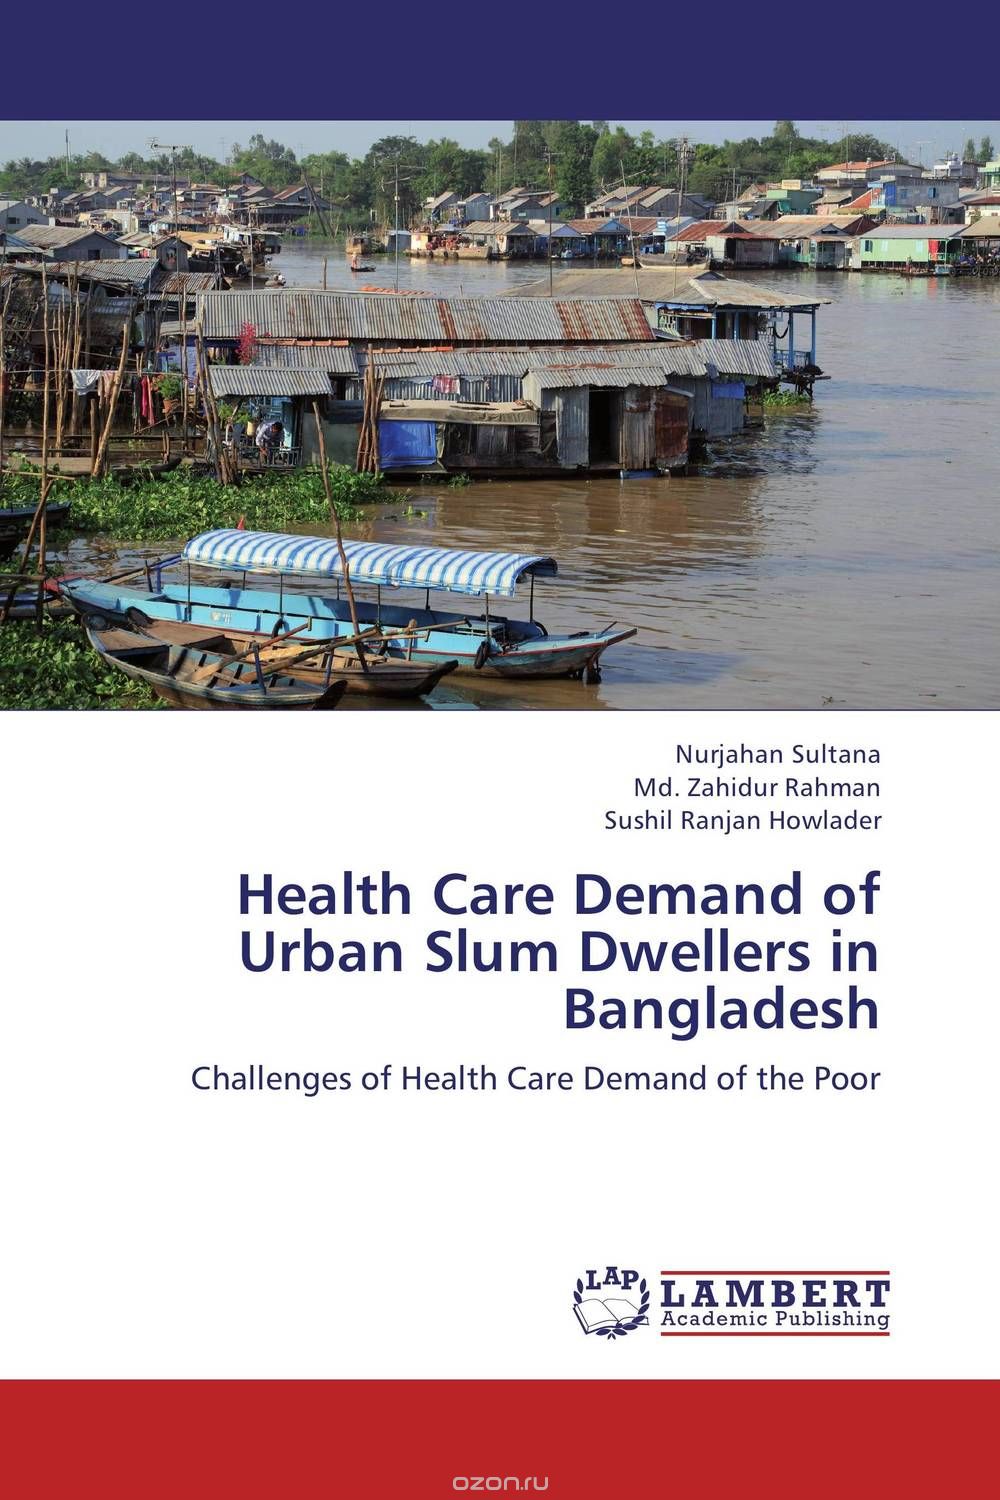 Health Care Demand of Urban Slum Dwellers in Bangladesh